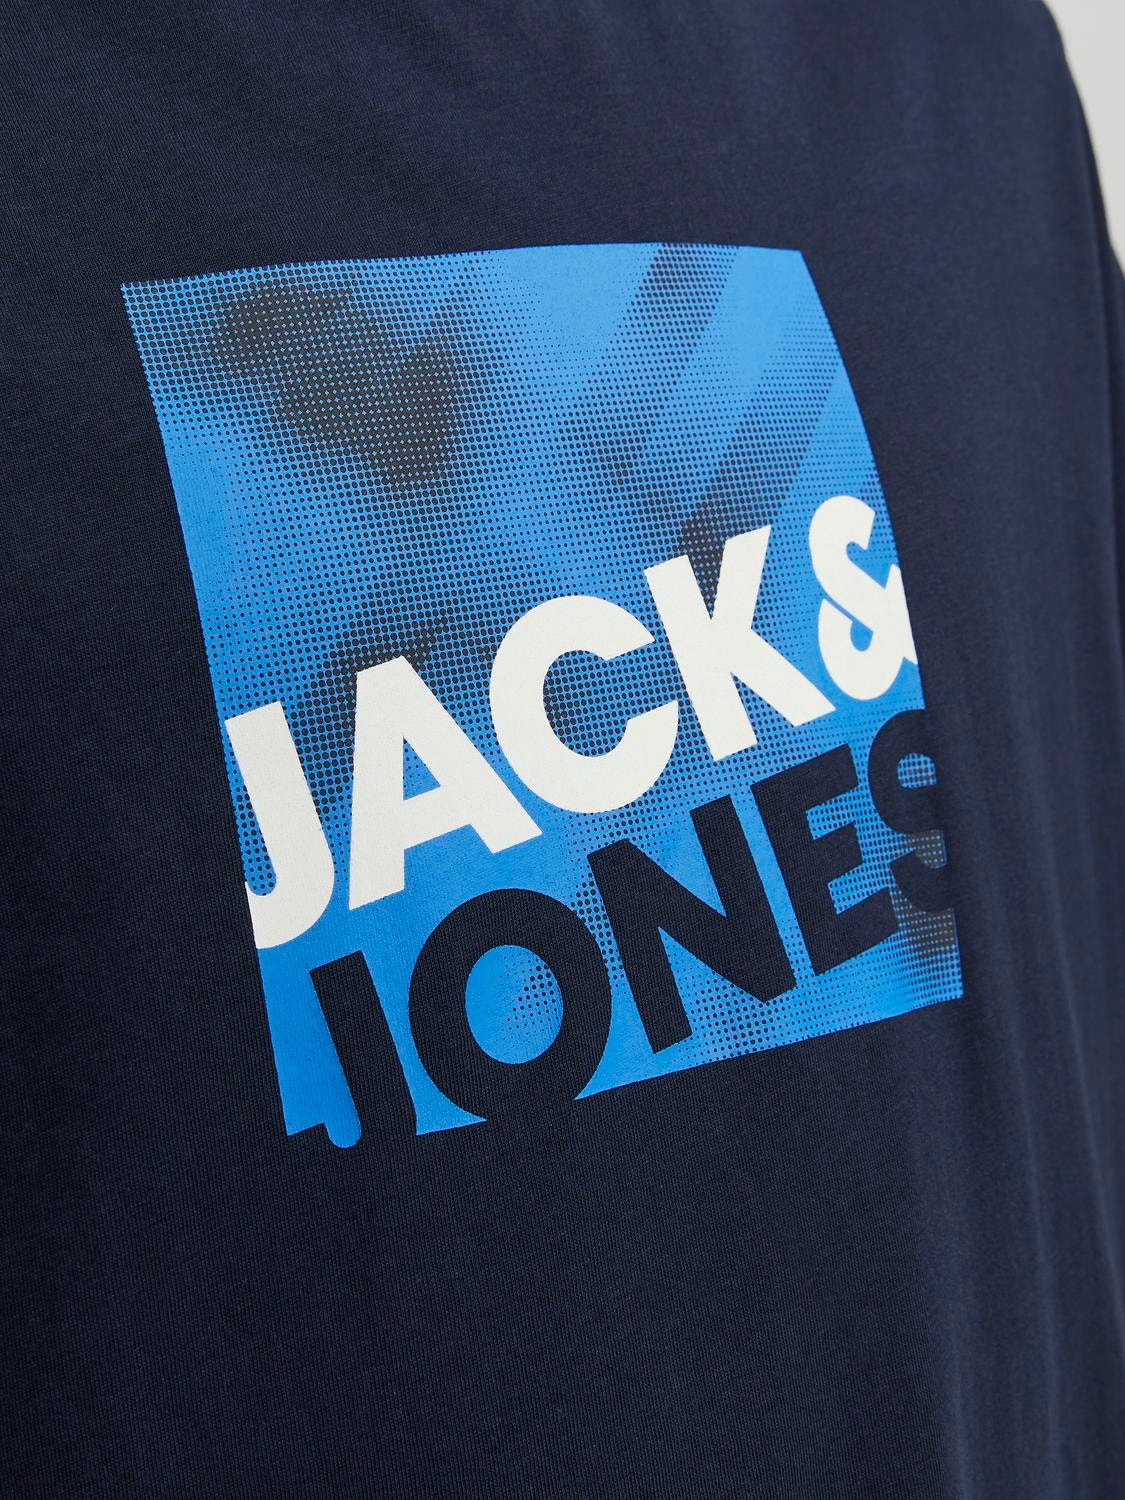 Jack & Jones T-shirt Logo Col rond -Navy Blazer - 12246992